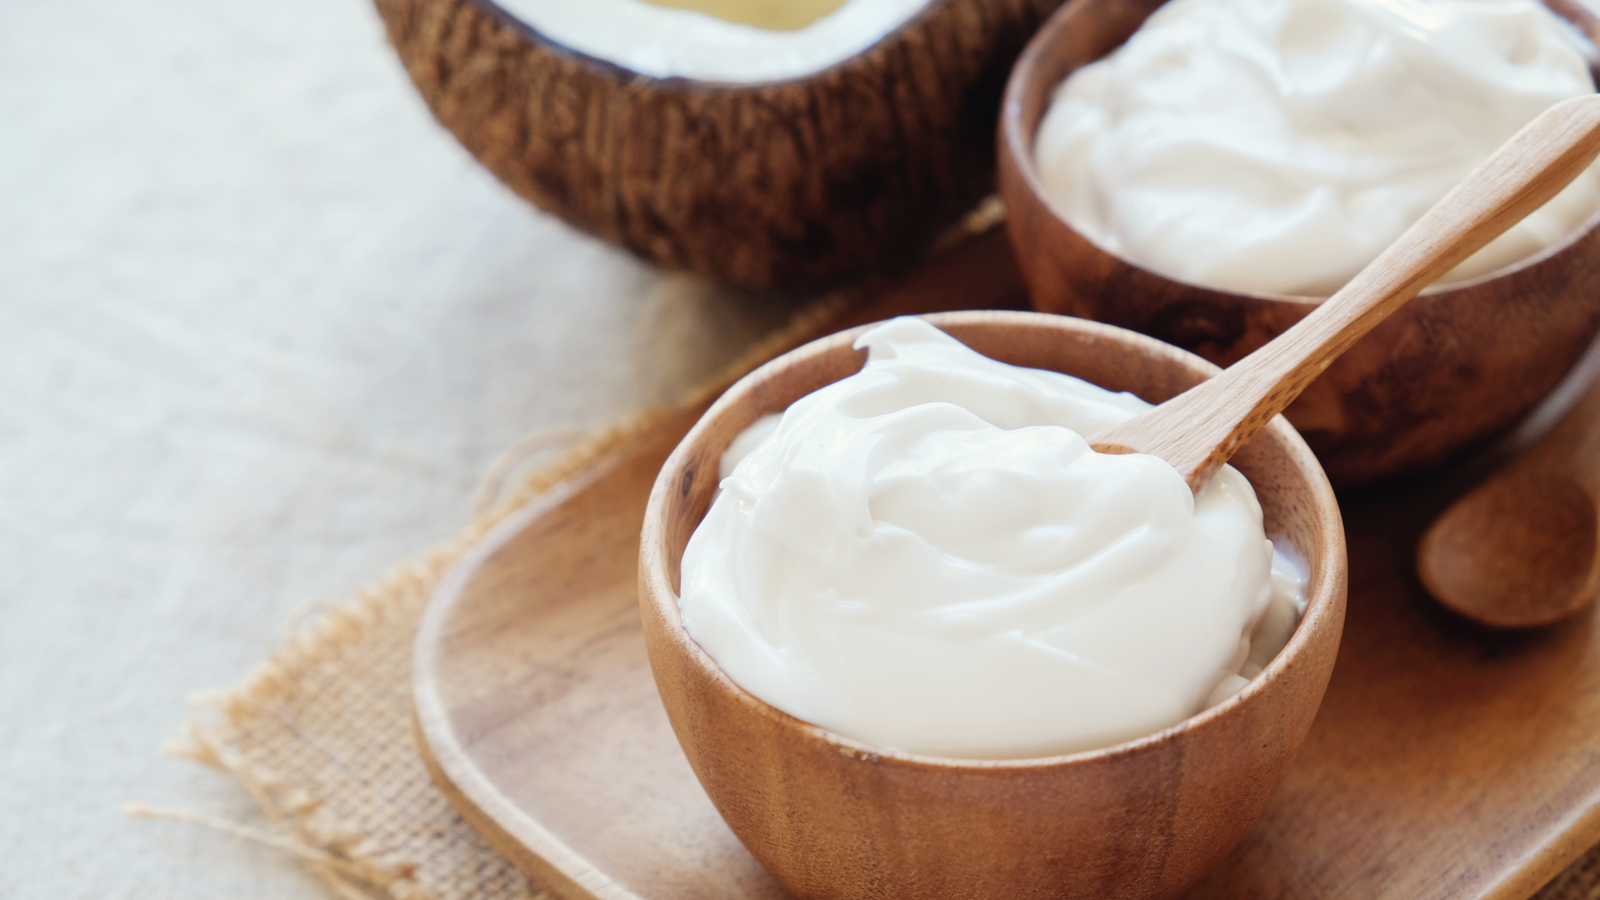 https://www.foodmatters.com/media/uploads/images/recipes/how-make-your-own-coconut-yogurt.jpg